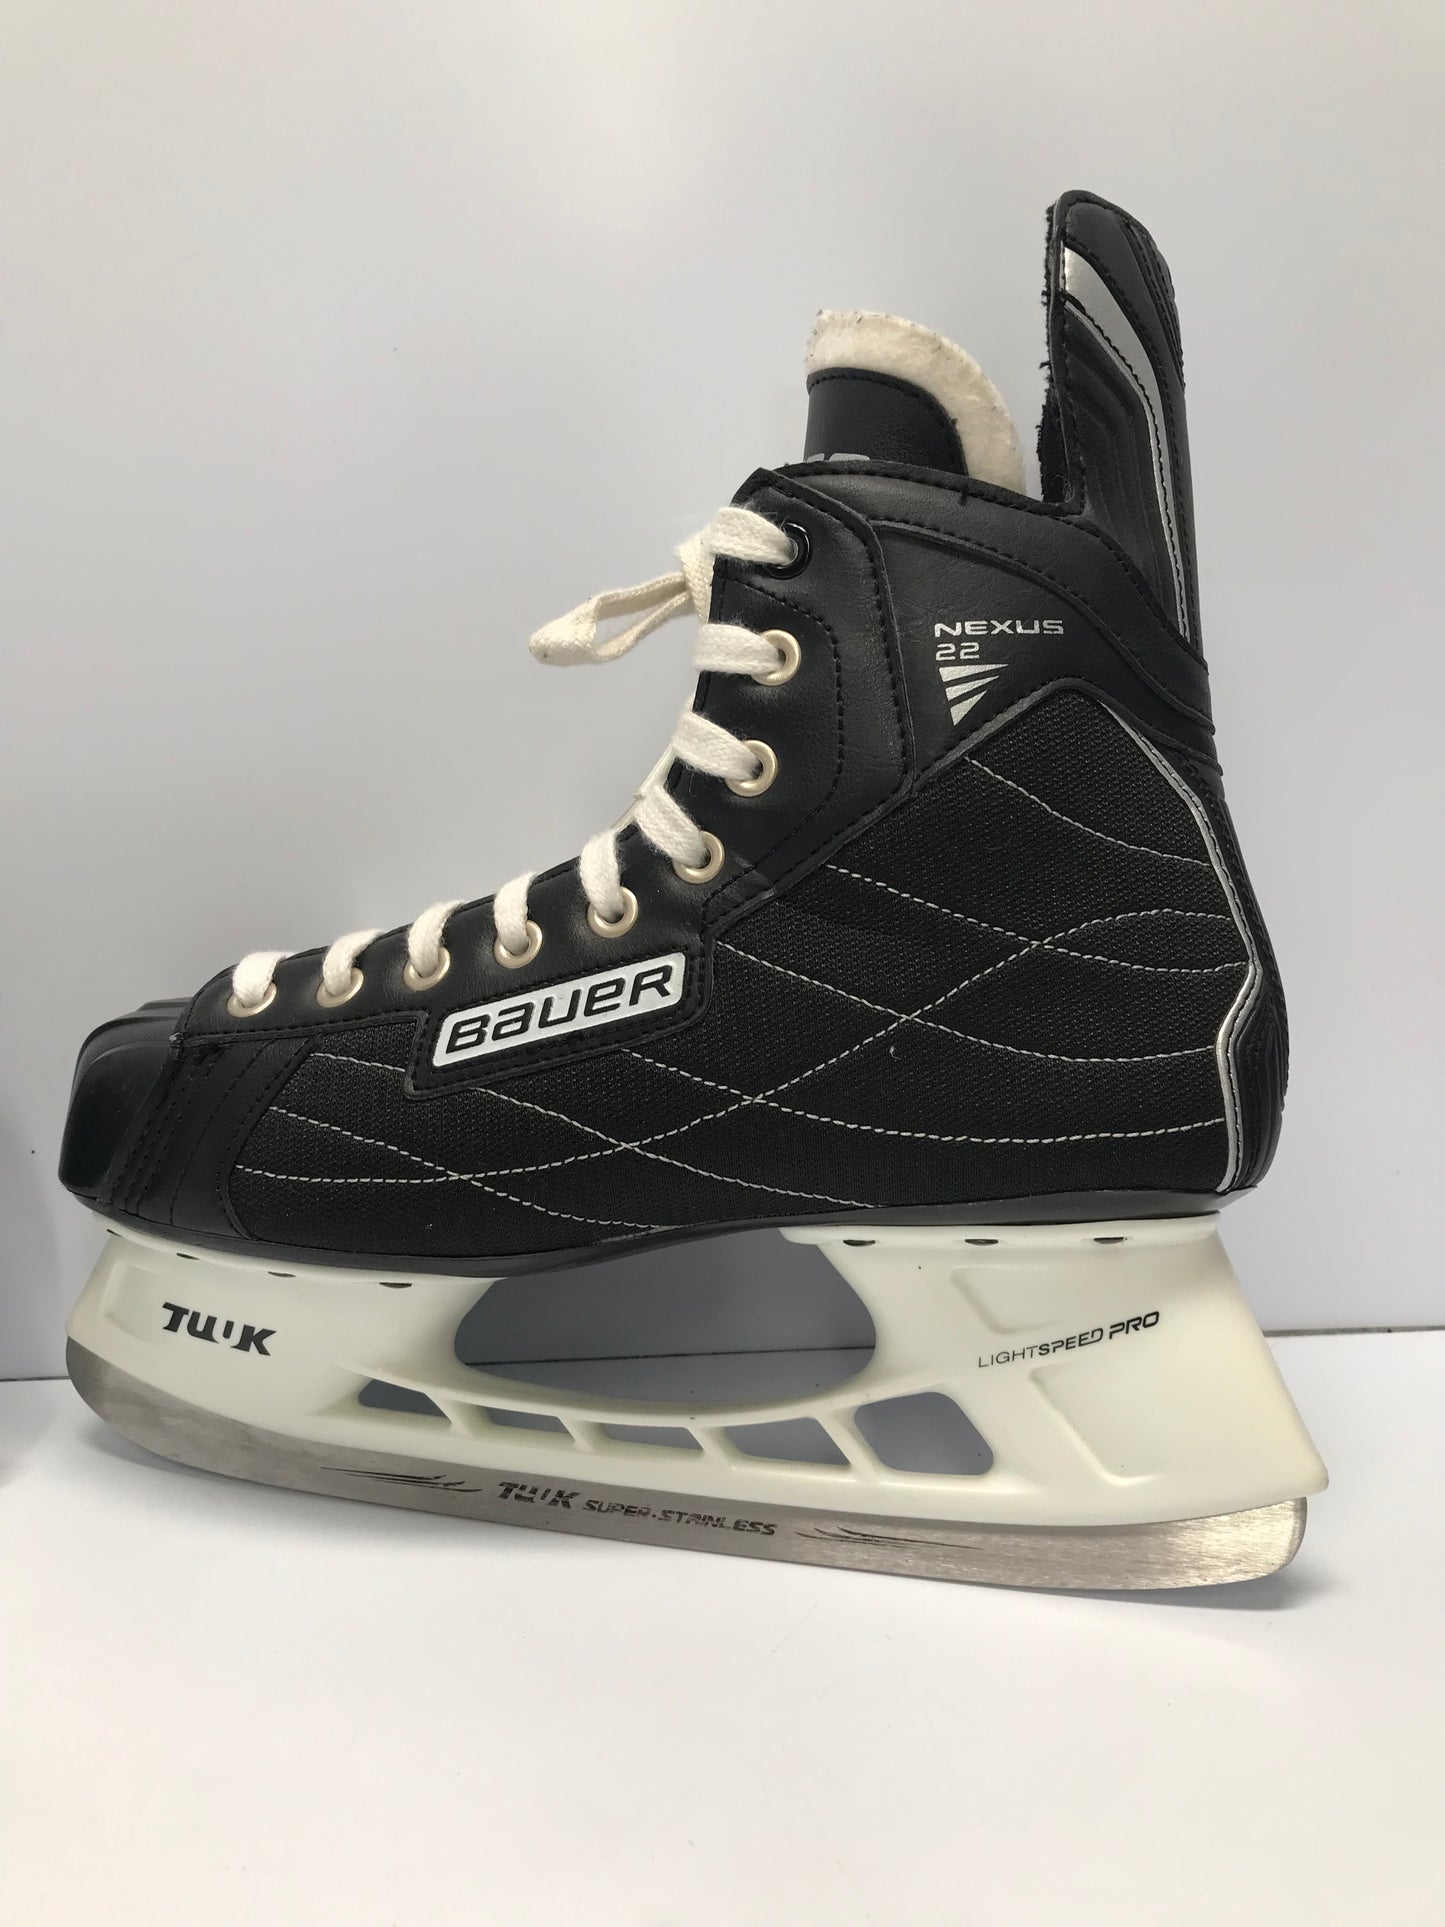 Hockey Skates Men's Size 10.5 Shoe 9 Skate Size Bauer Nexus New